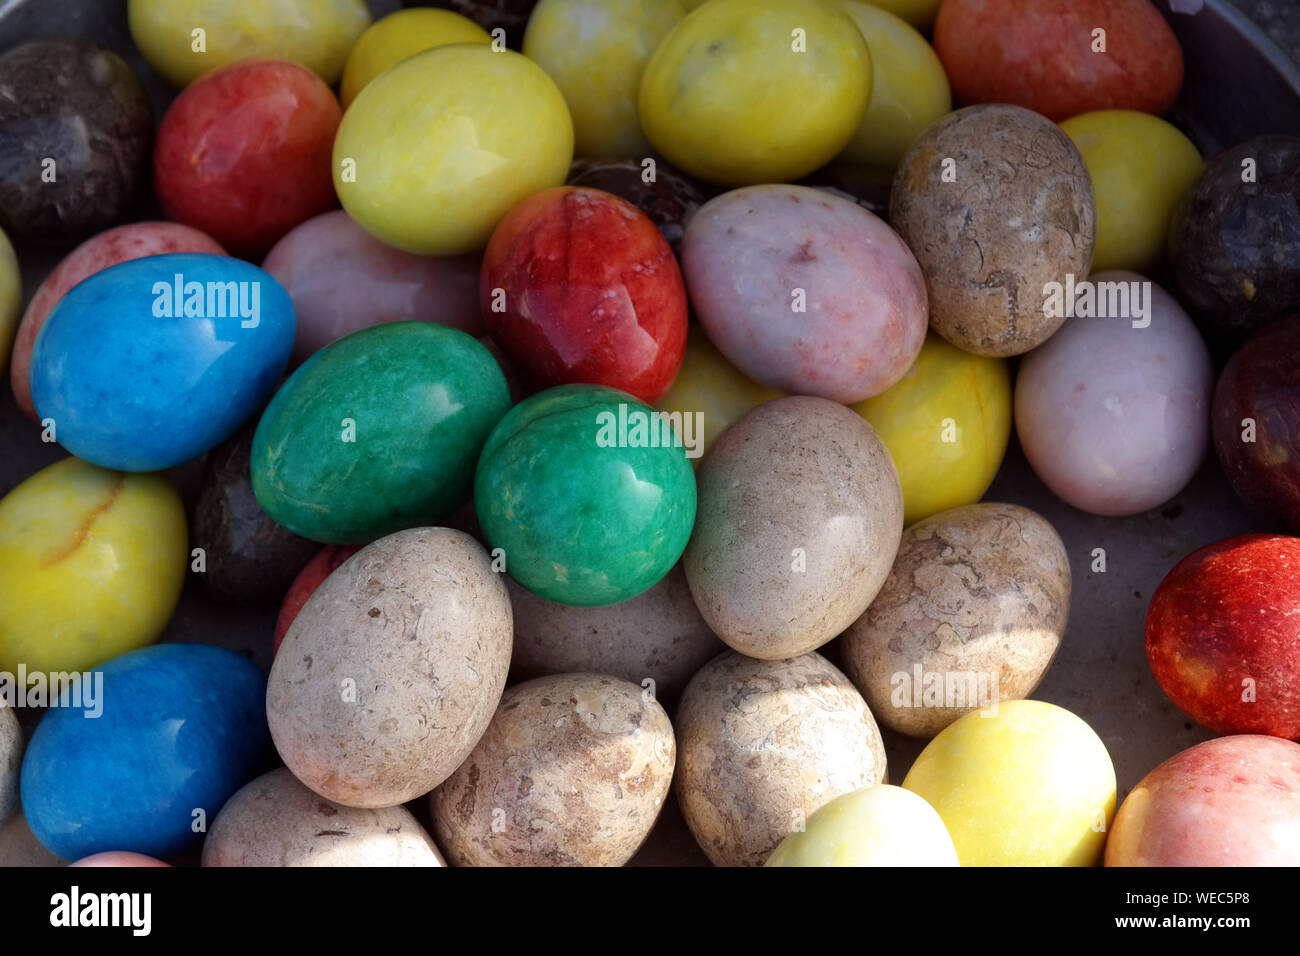 Сolored stones. Red, yellow, green, multi colored stones. Stock Photo